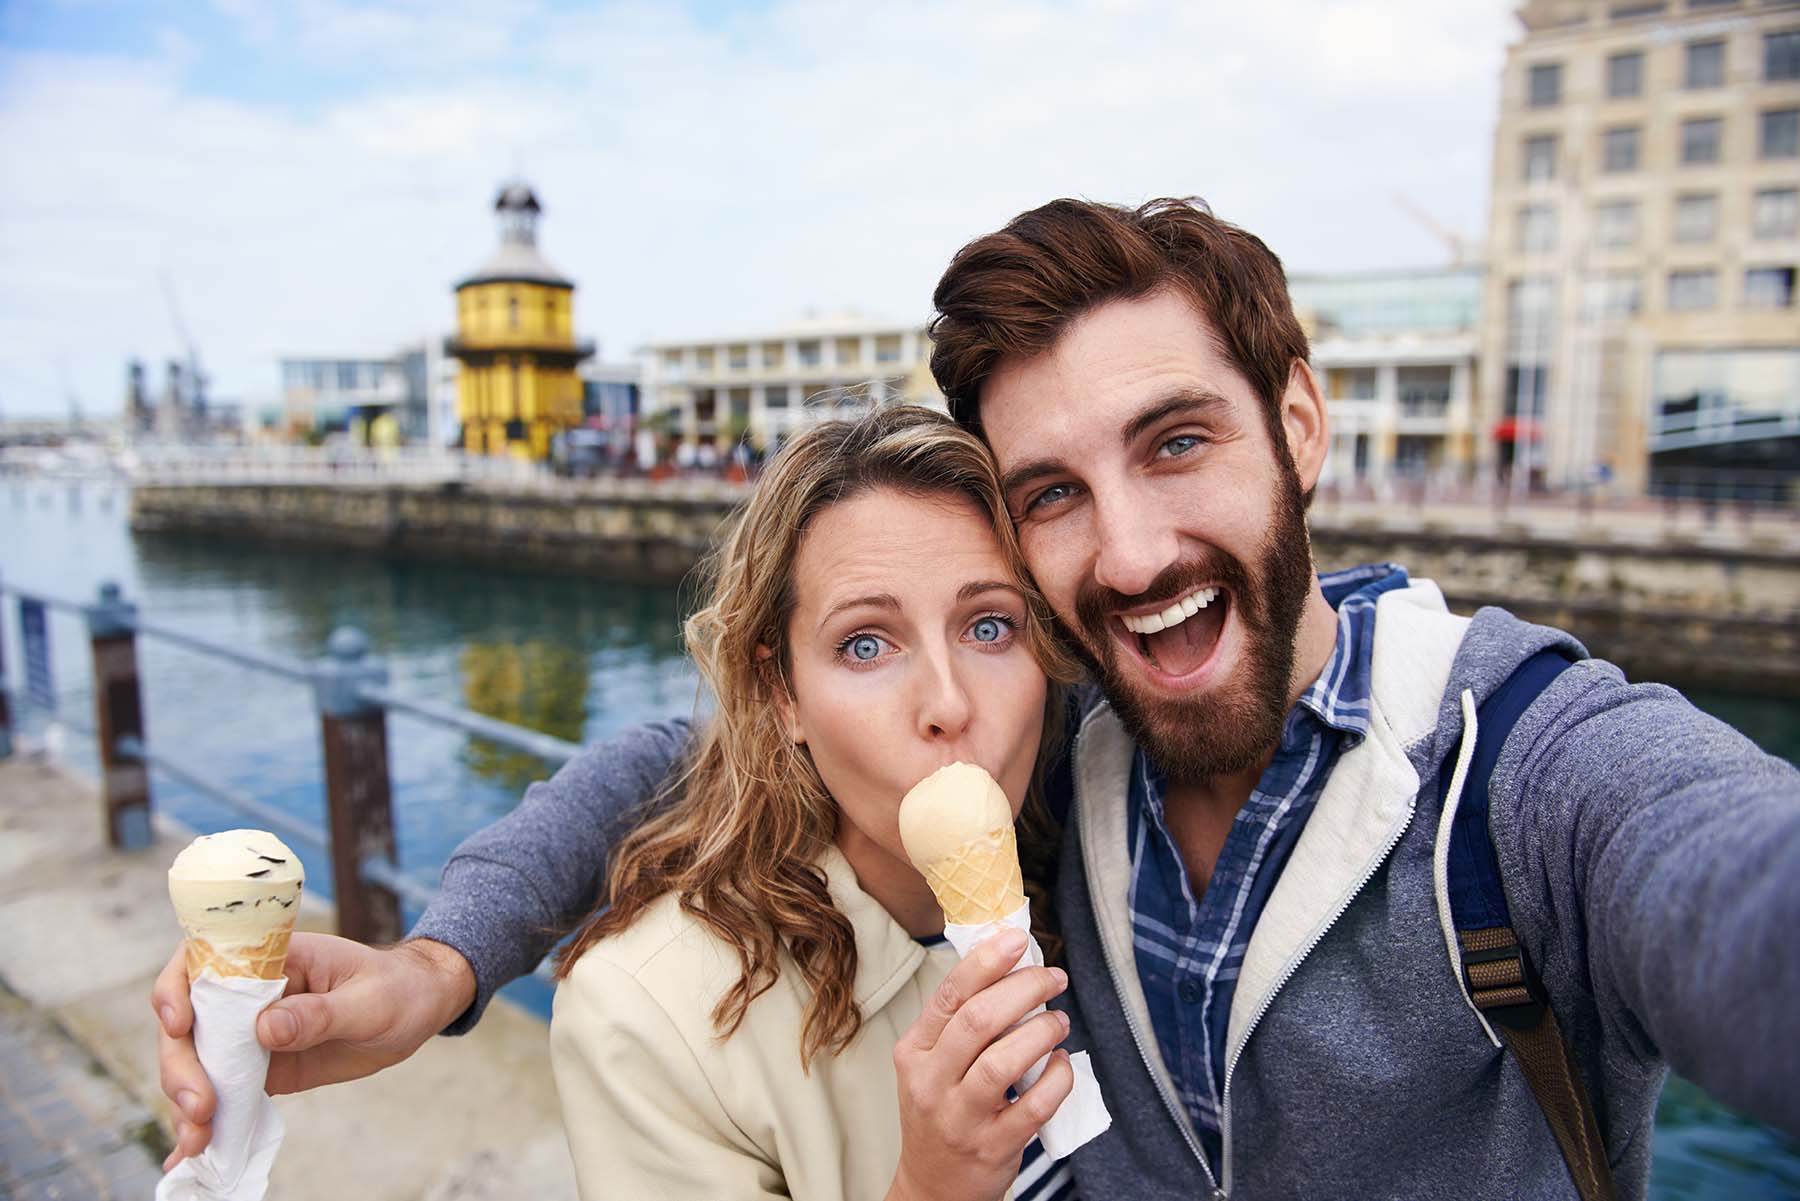 Couple eating ice cream. Vacation photo.